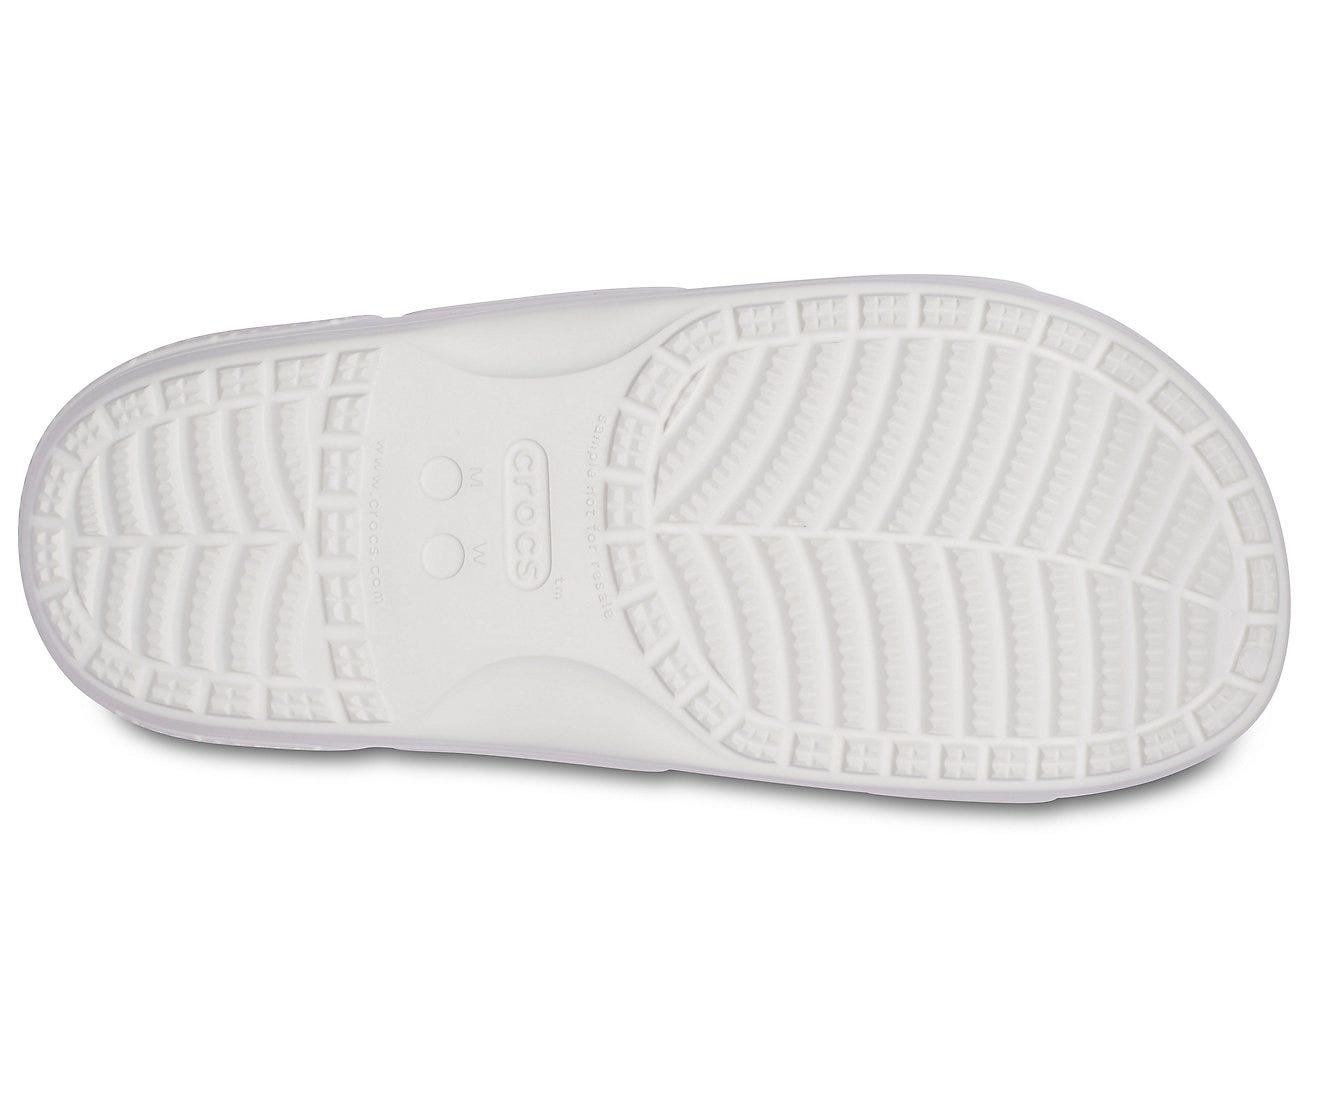 Crocs Classic White Unisex Sandal (206761-100)